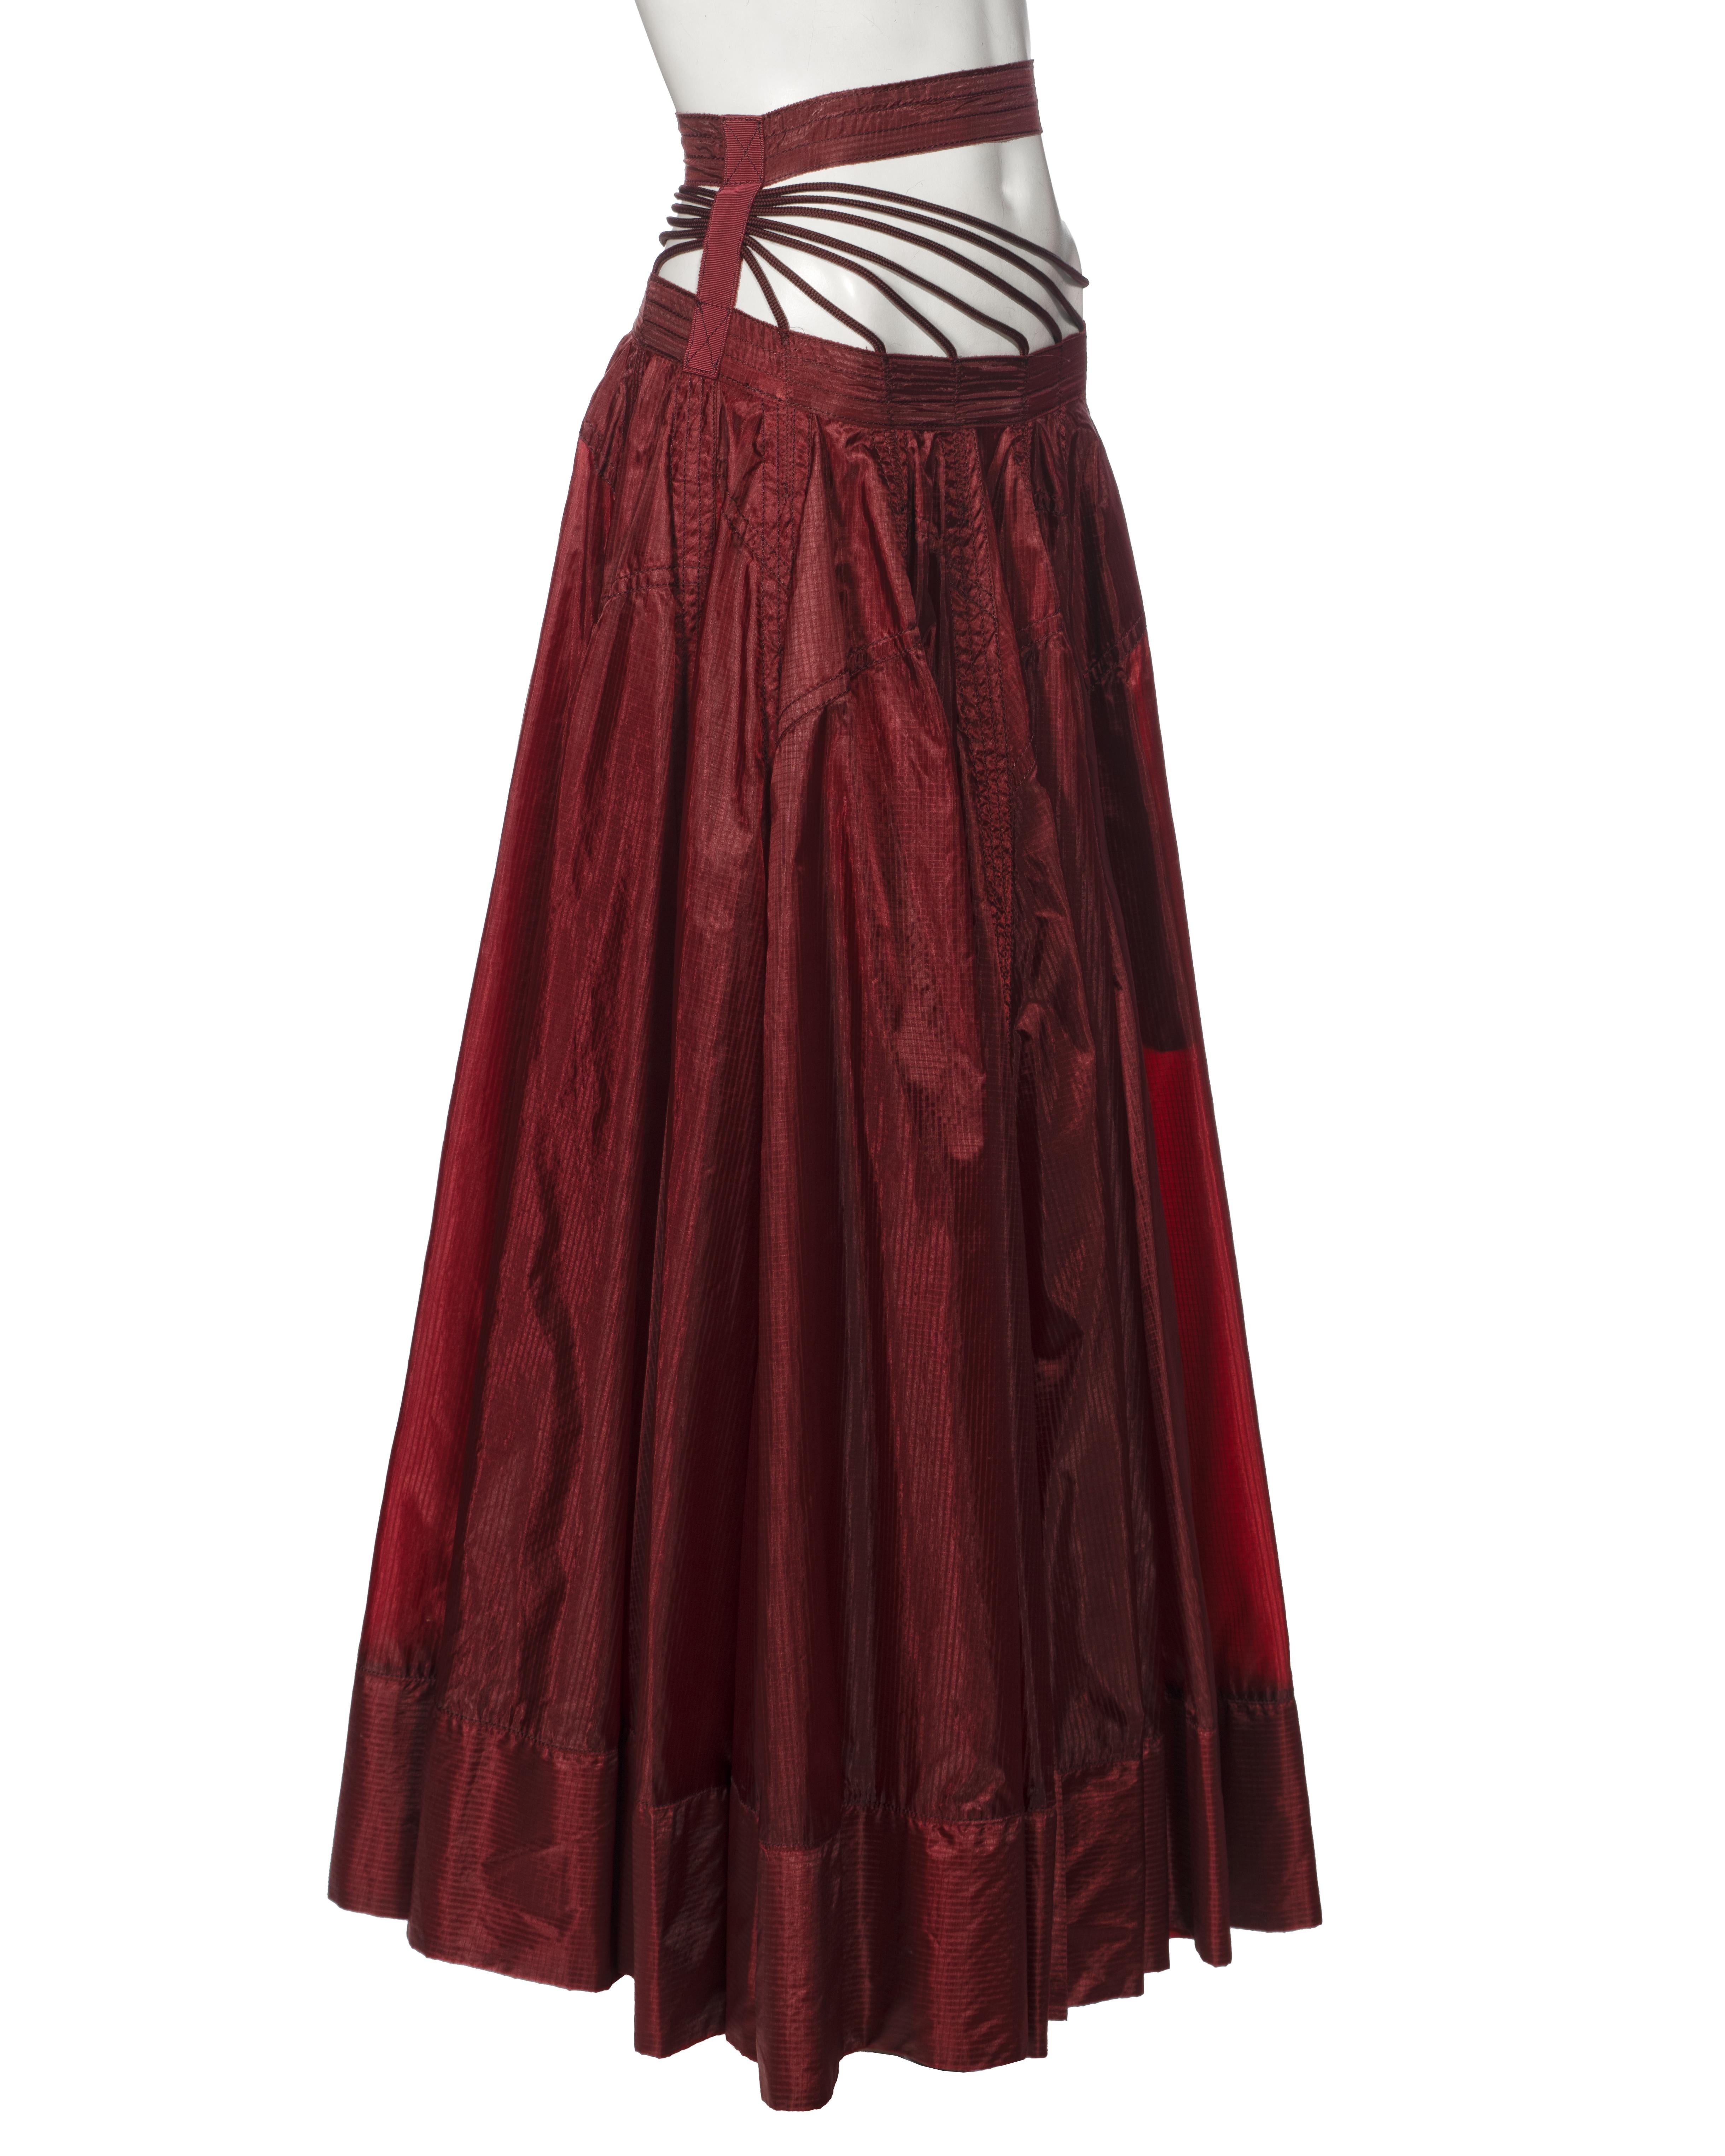 Jean Paul Gaultier Burgundy Ripstop Nylon Strappy-Waist Maxi Skirt, ss 2002 For Sale 1